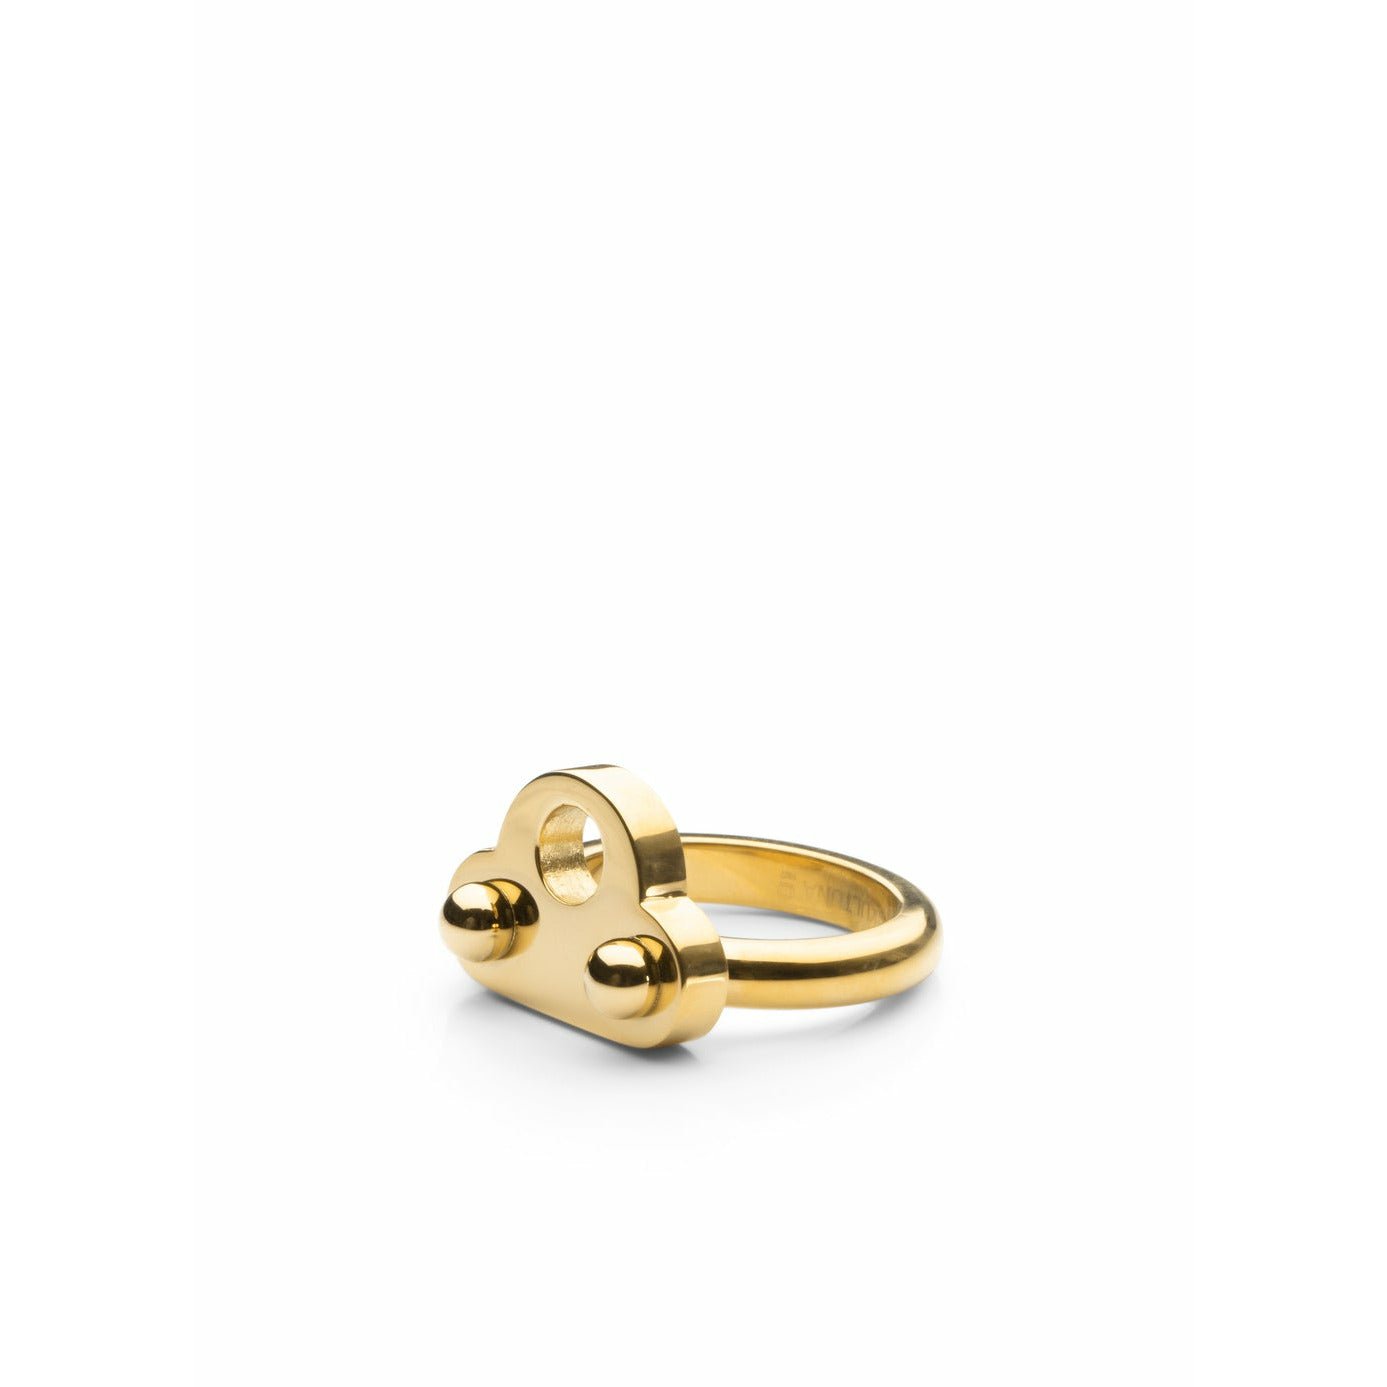 Skultuna Key Ring Ring Small Gold Chapado, Ø1,6 cm